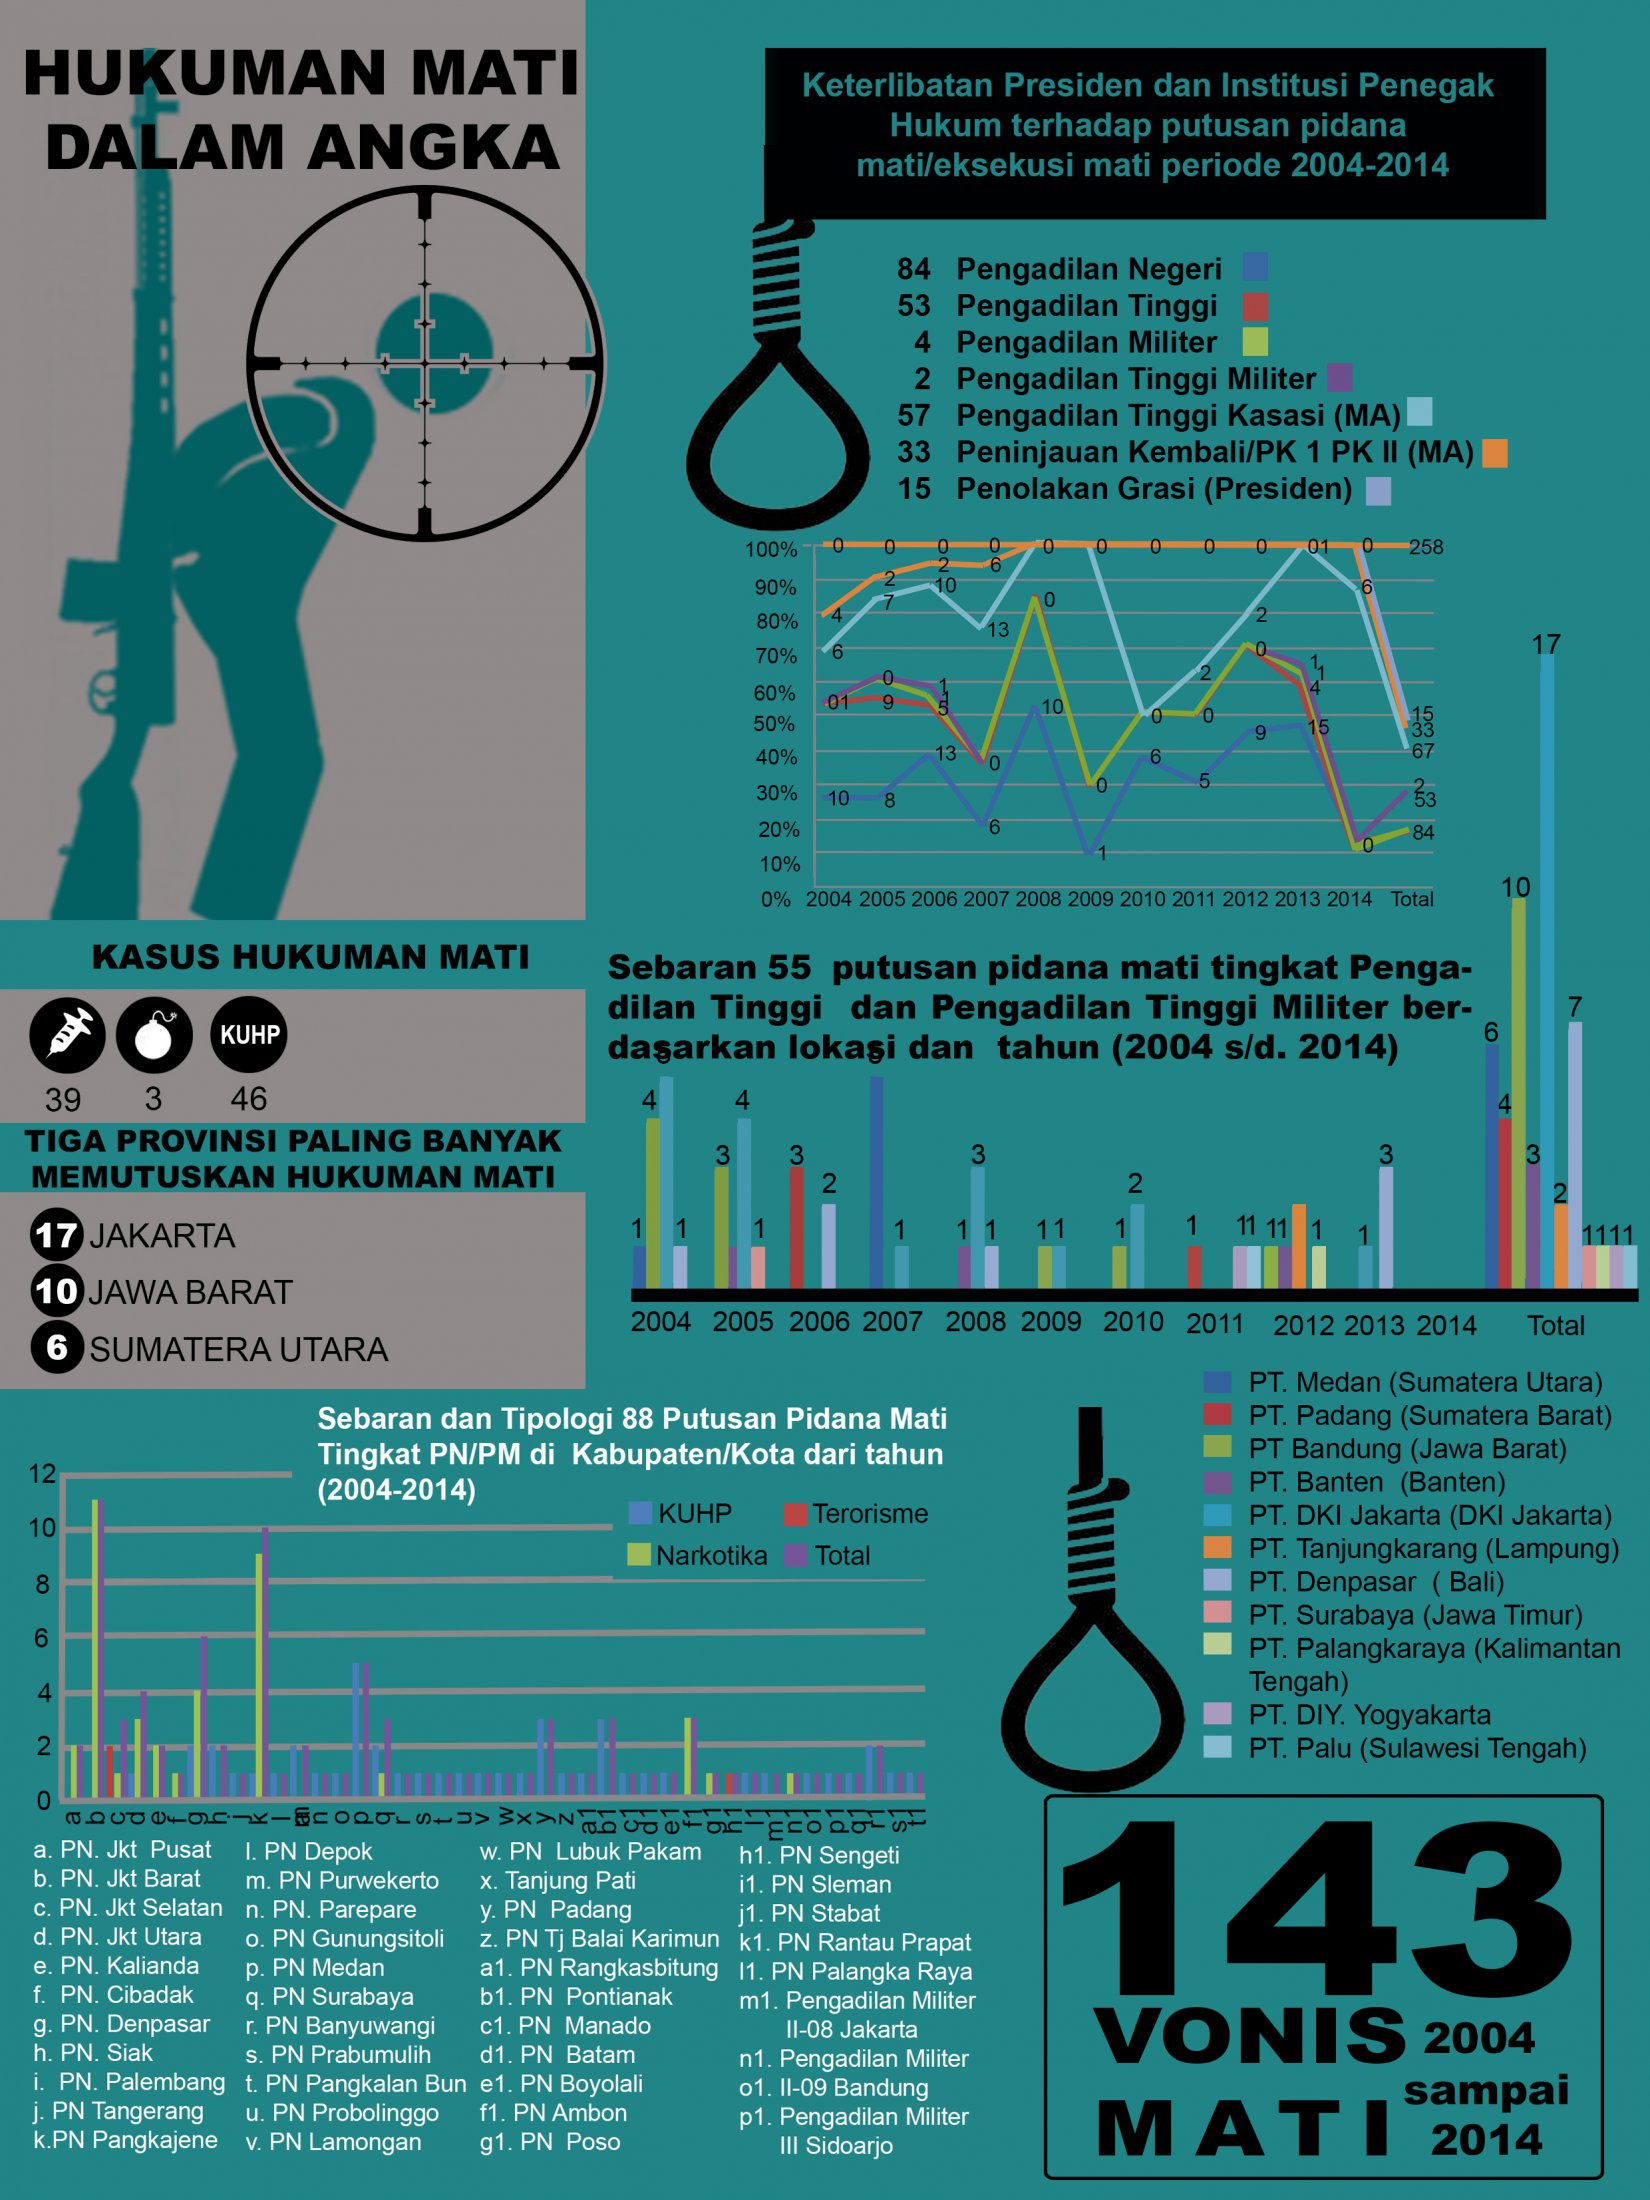 angka hukuman mati indonesia infografis